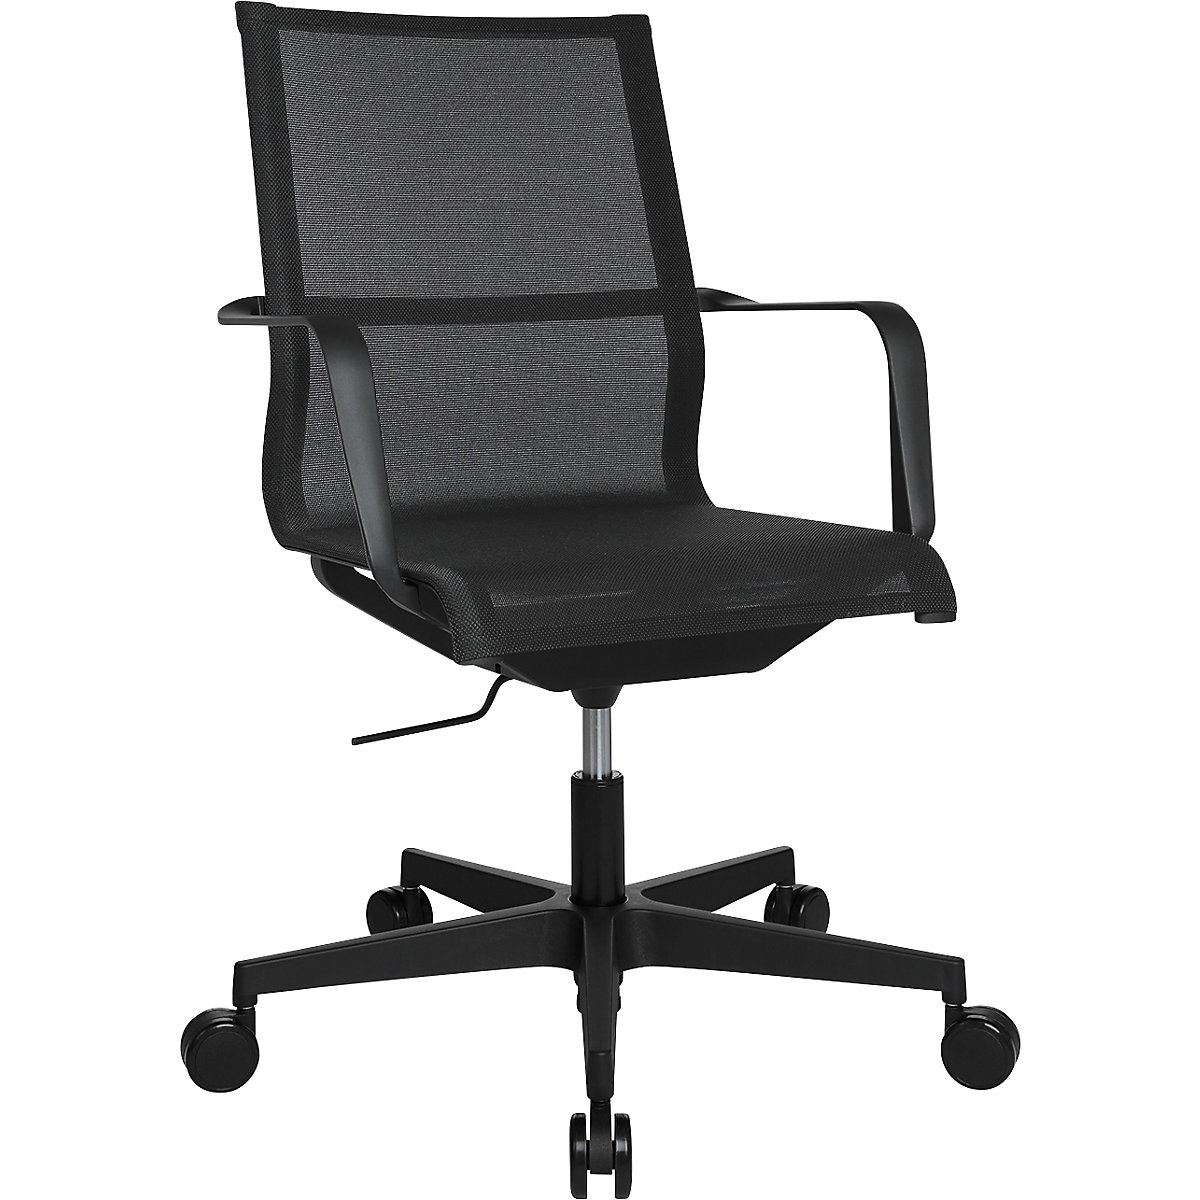 SITNESS LIFE 40 office swivel chair – Topstar